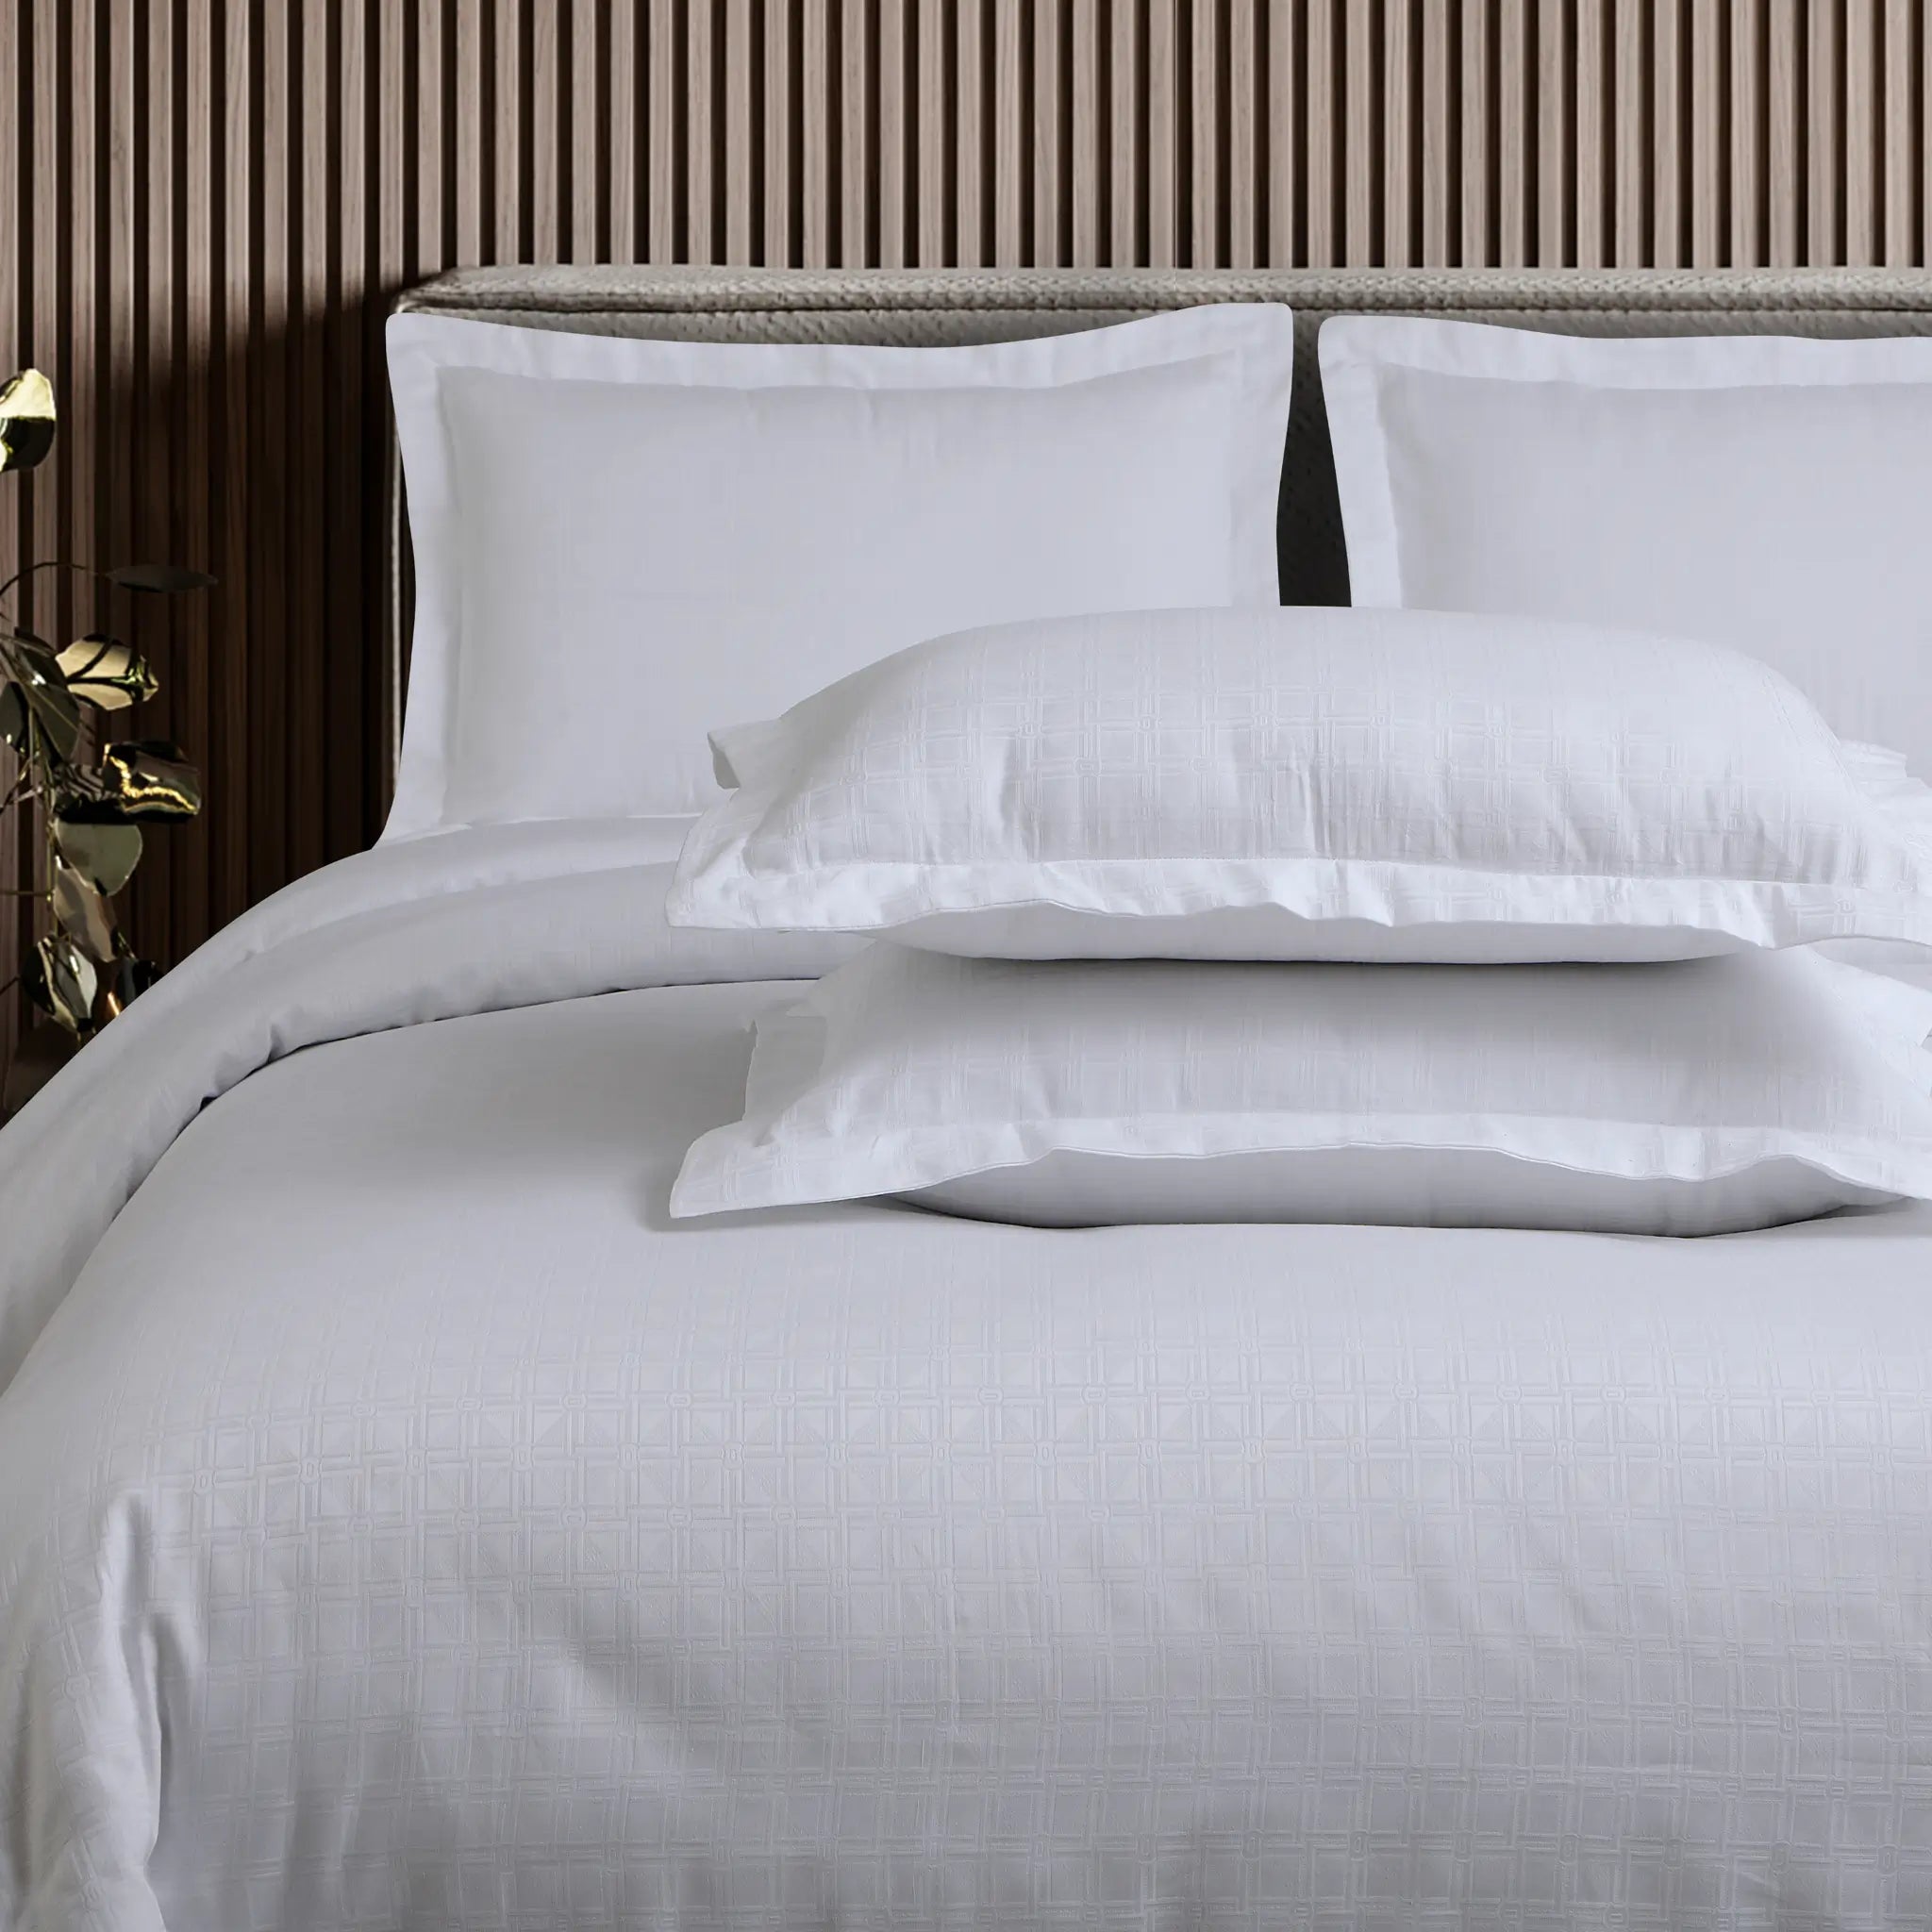 Malako Amalfi Jacquard White Abstract 500 TC 100% Cotton King Size Bed Sheet/Duvet Cover - MALAKO